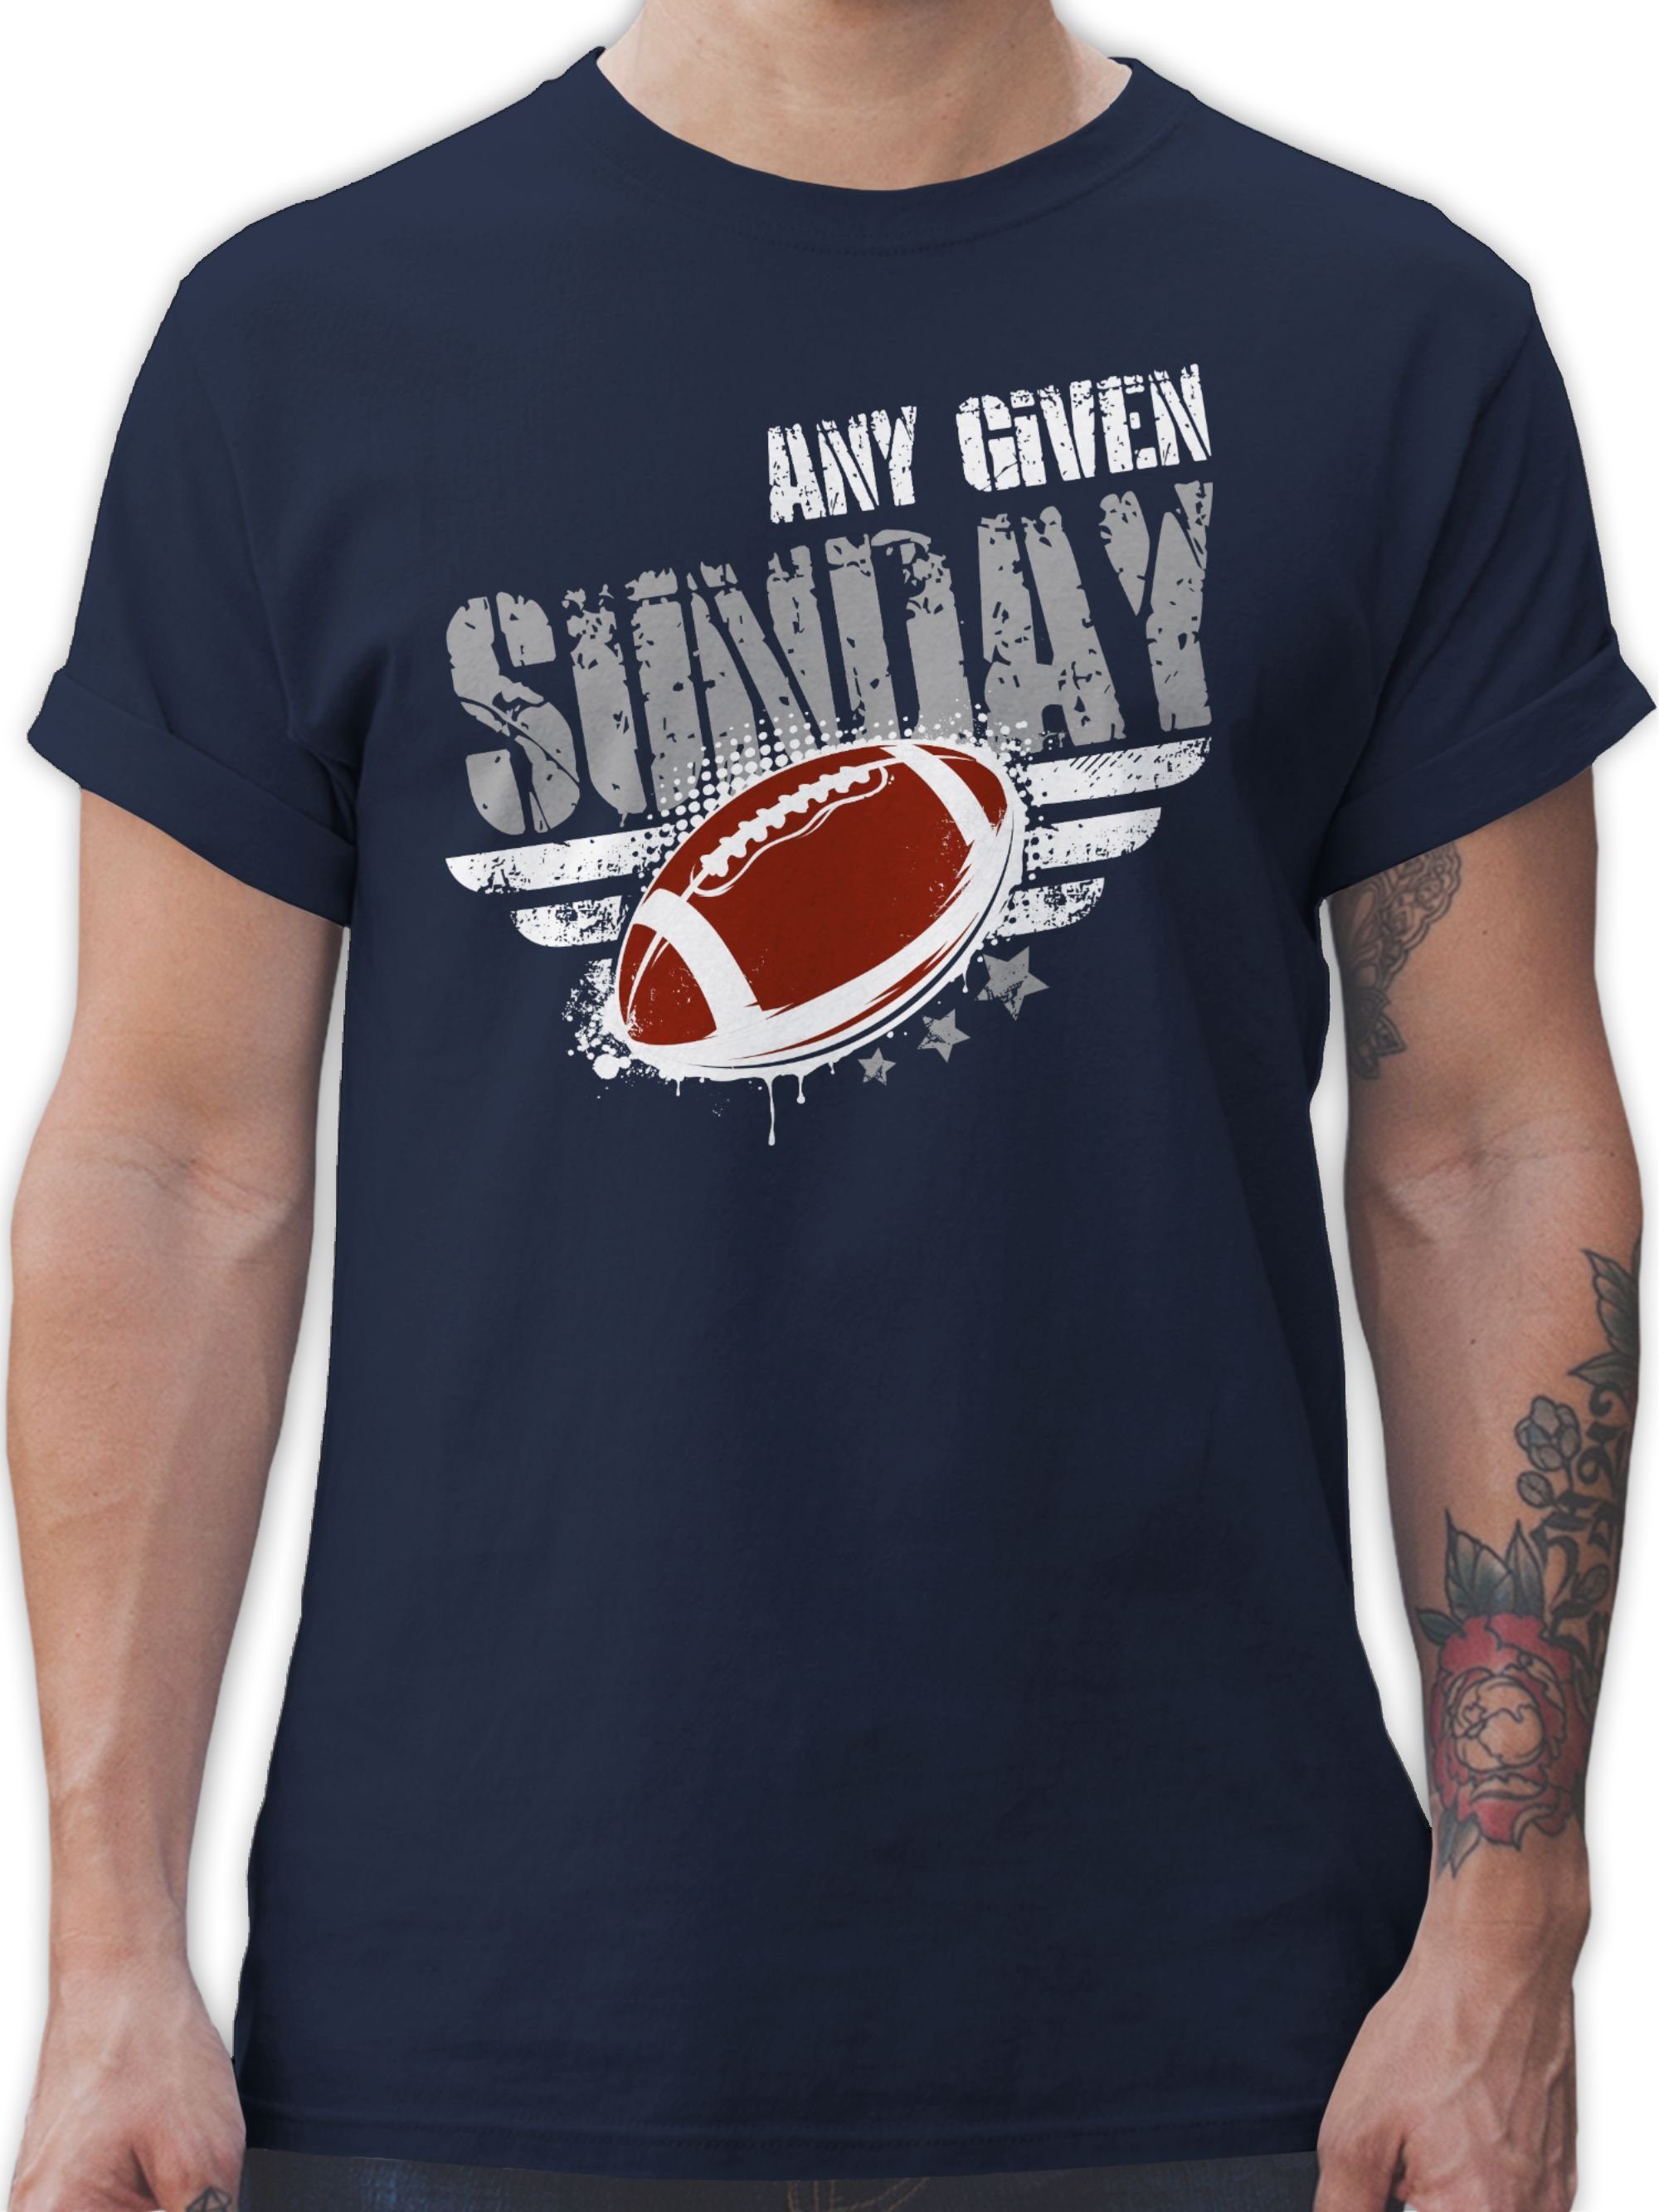 NFL Blau Any American T-Shirt Given Navy Shirtracer Sunday 2 Football Football